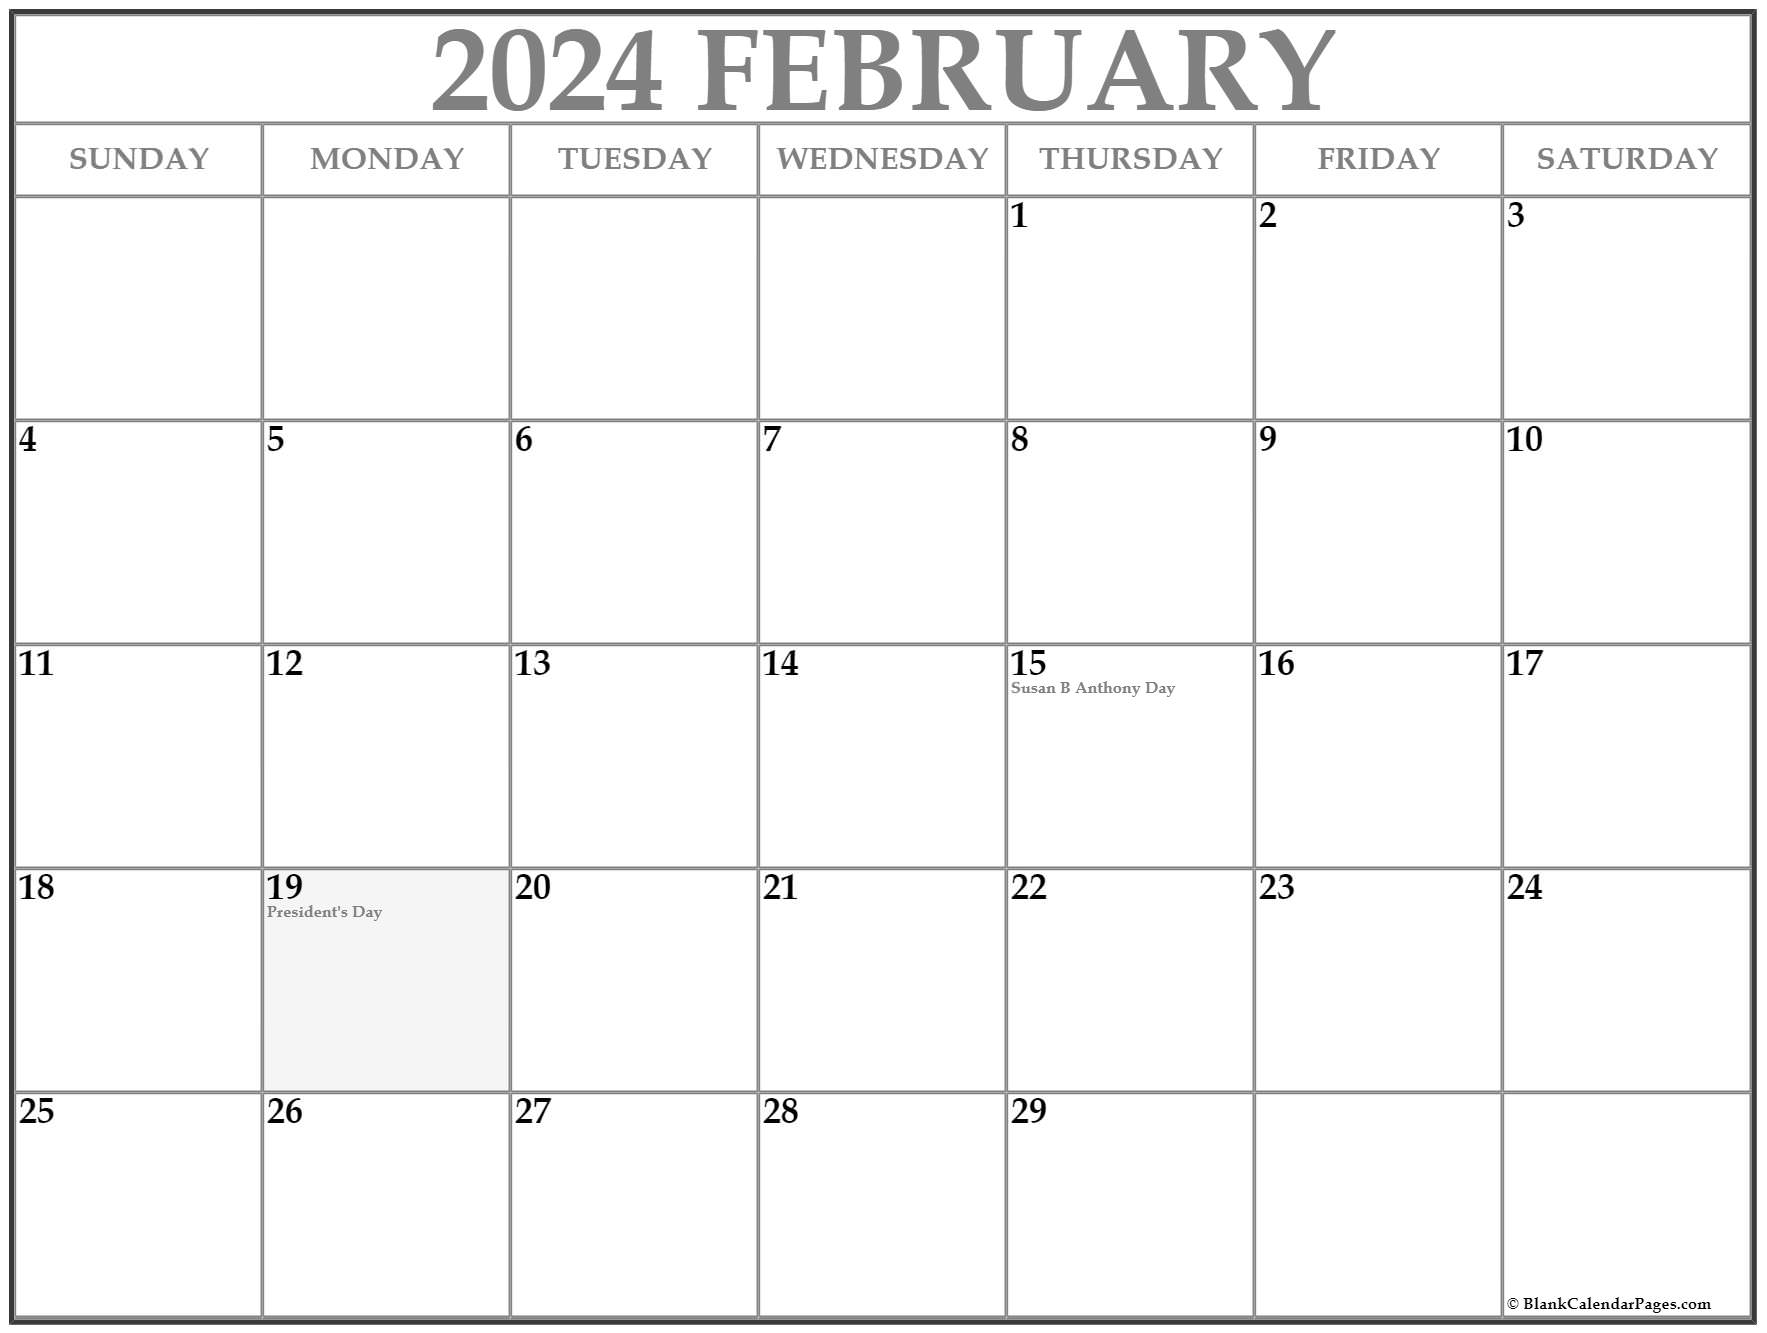 Feburary 2024 Printable Calendar 2024 CALENDAR PRINTABLE